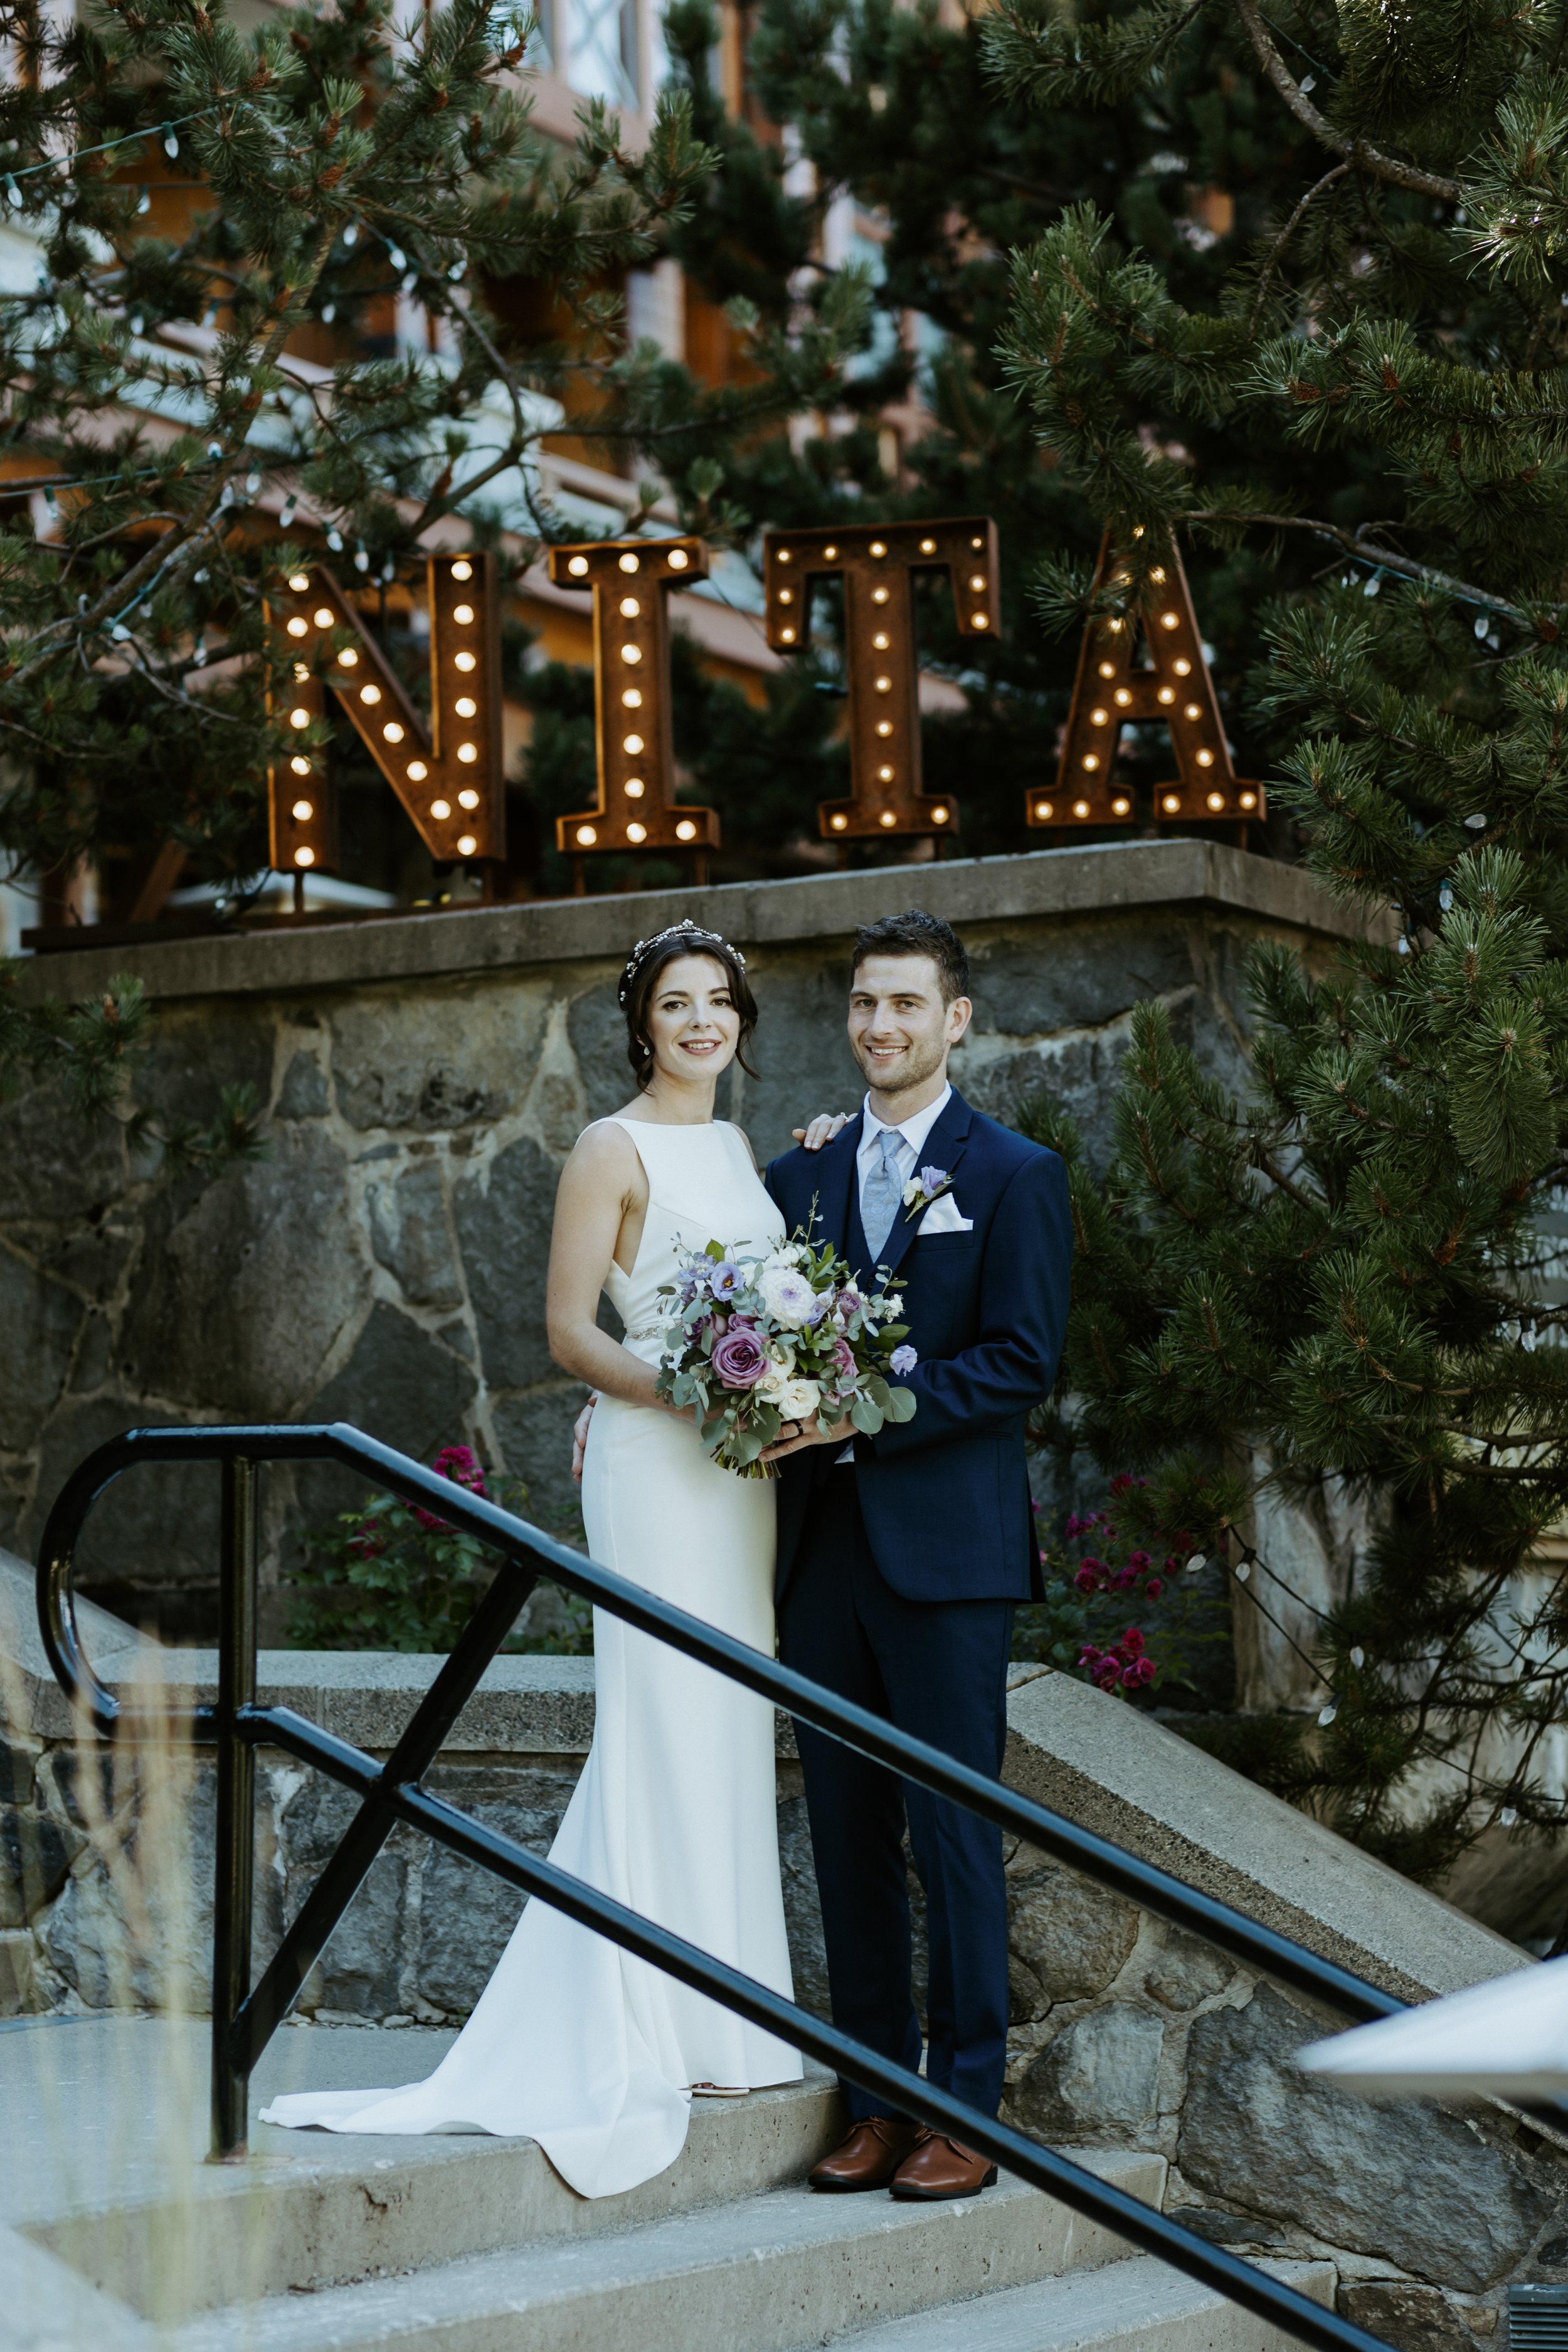 angiegallantphotography_whistler-wedding-orla-and-niall-310.jpg